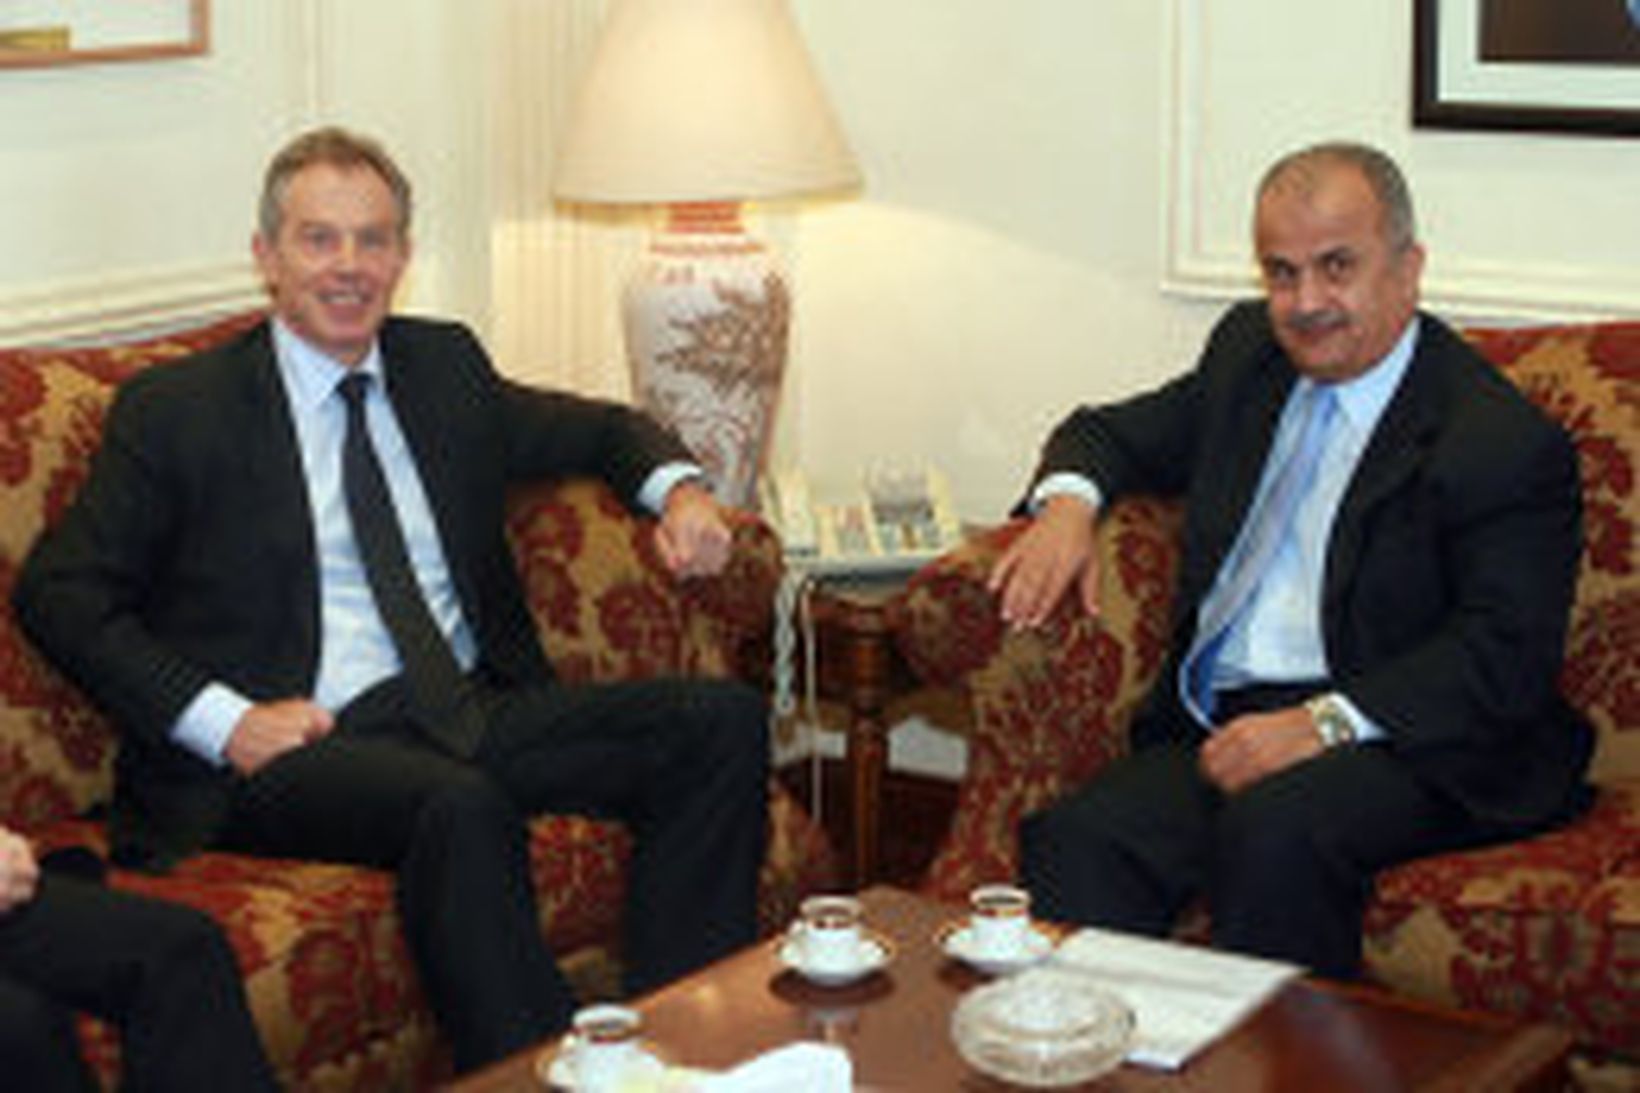 Tony Blair ásamt Abdel Ilah Khatib í Jórdaníu í dag.